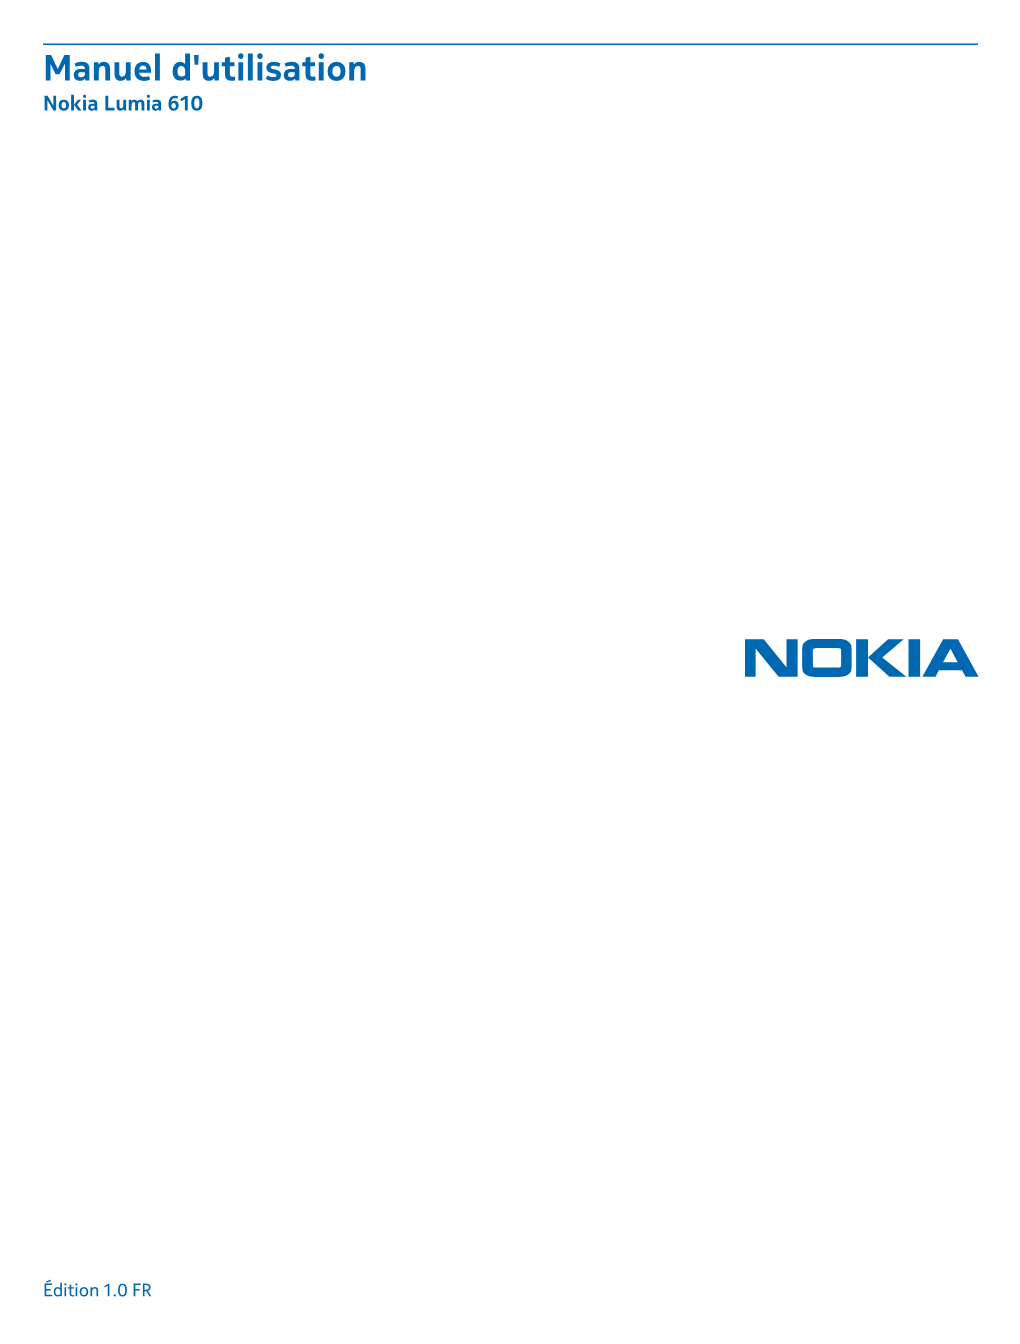 Manuel D'utilisation Nokia Lumia 610